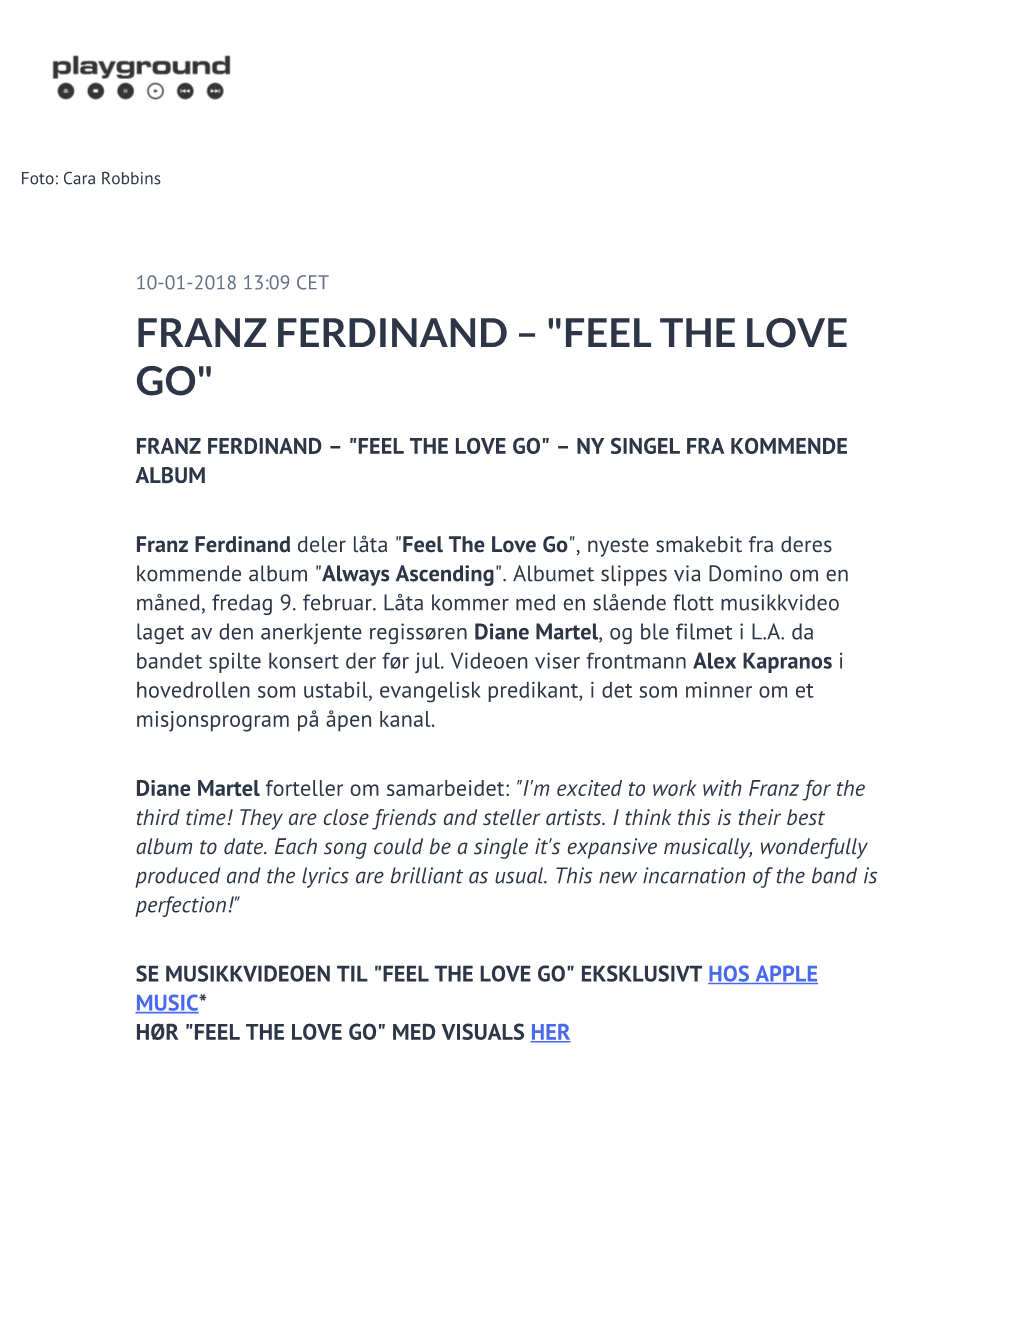 Franz Ferdinand – "Feel the Love Go"